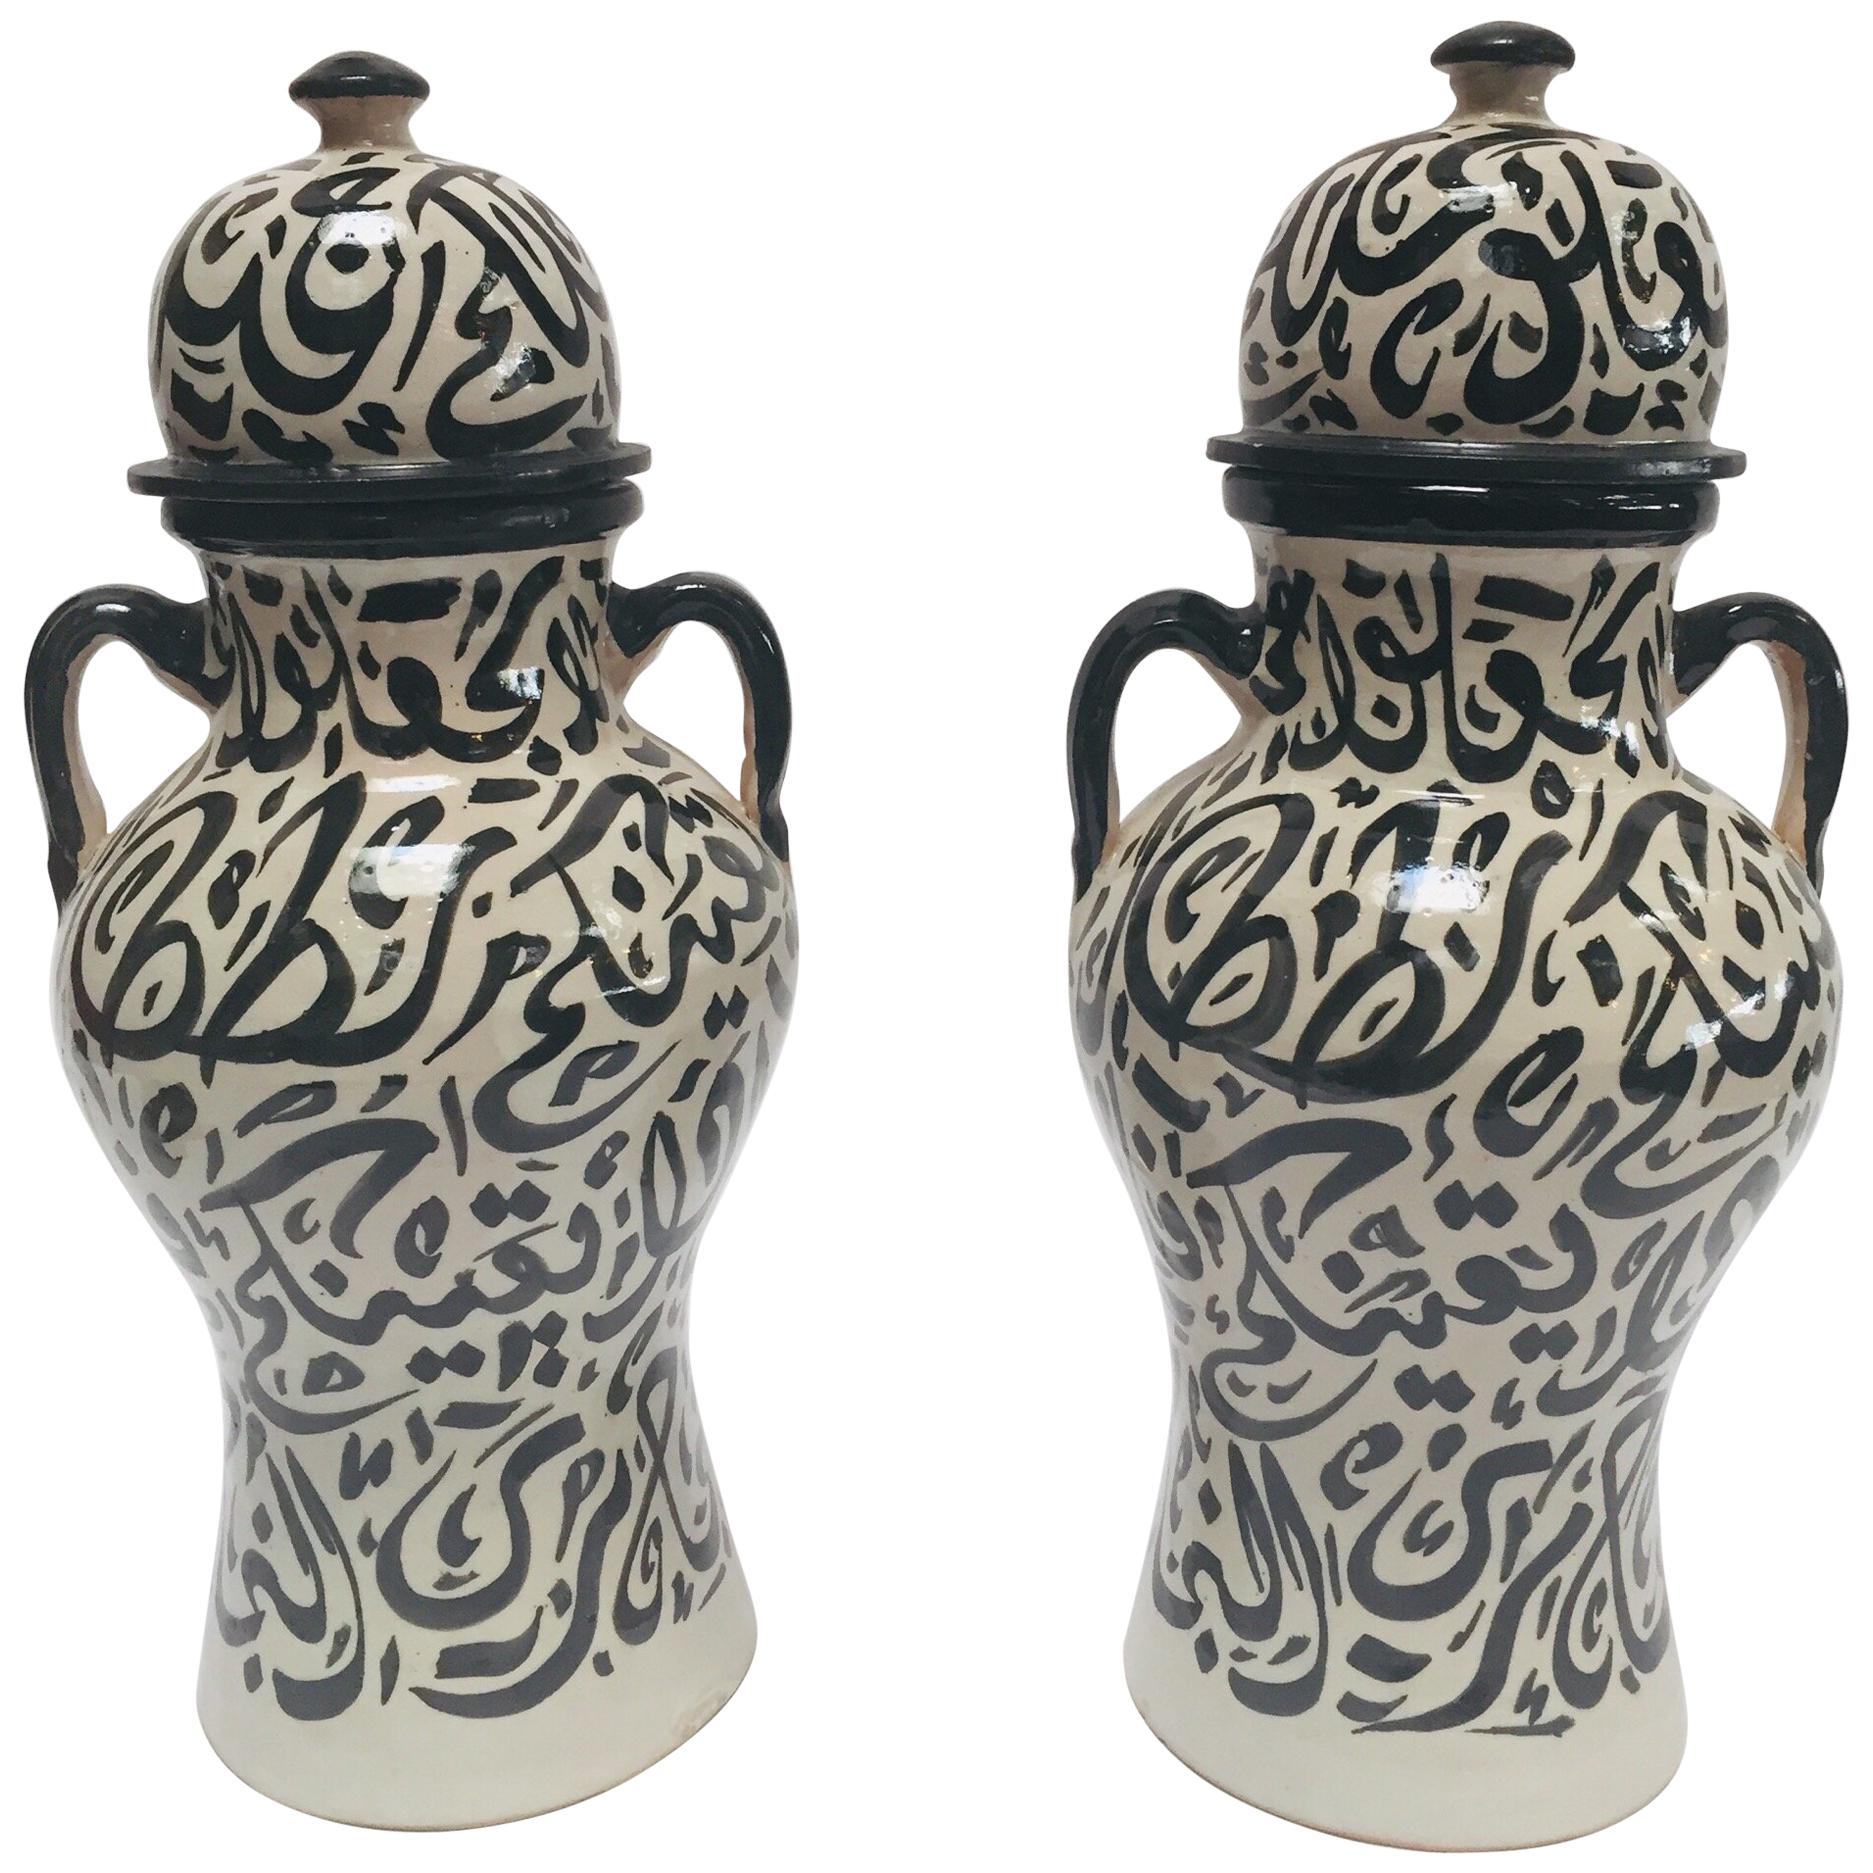 Pair of Moorish Glazed Ceramic Jars with Arabic Calligraphy from Fez